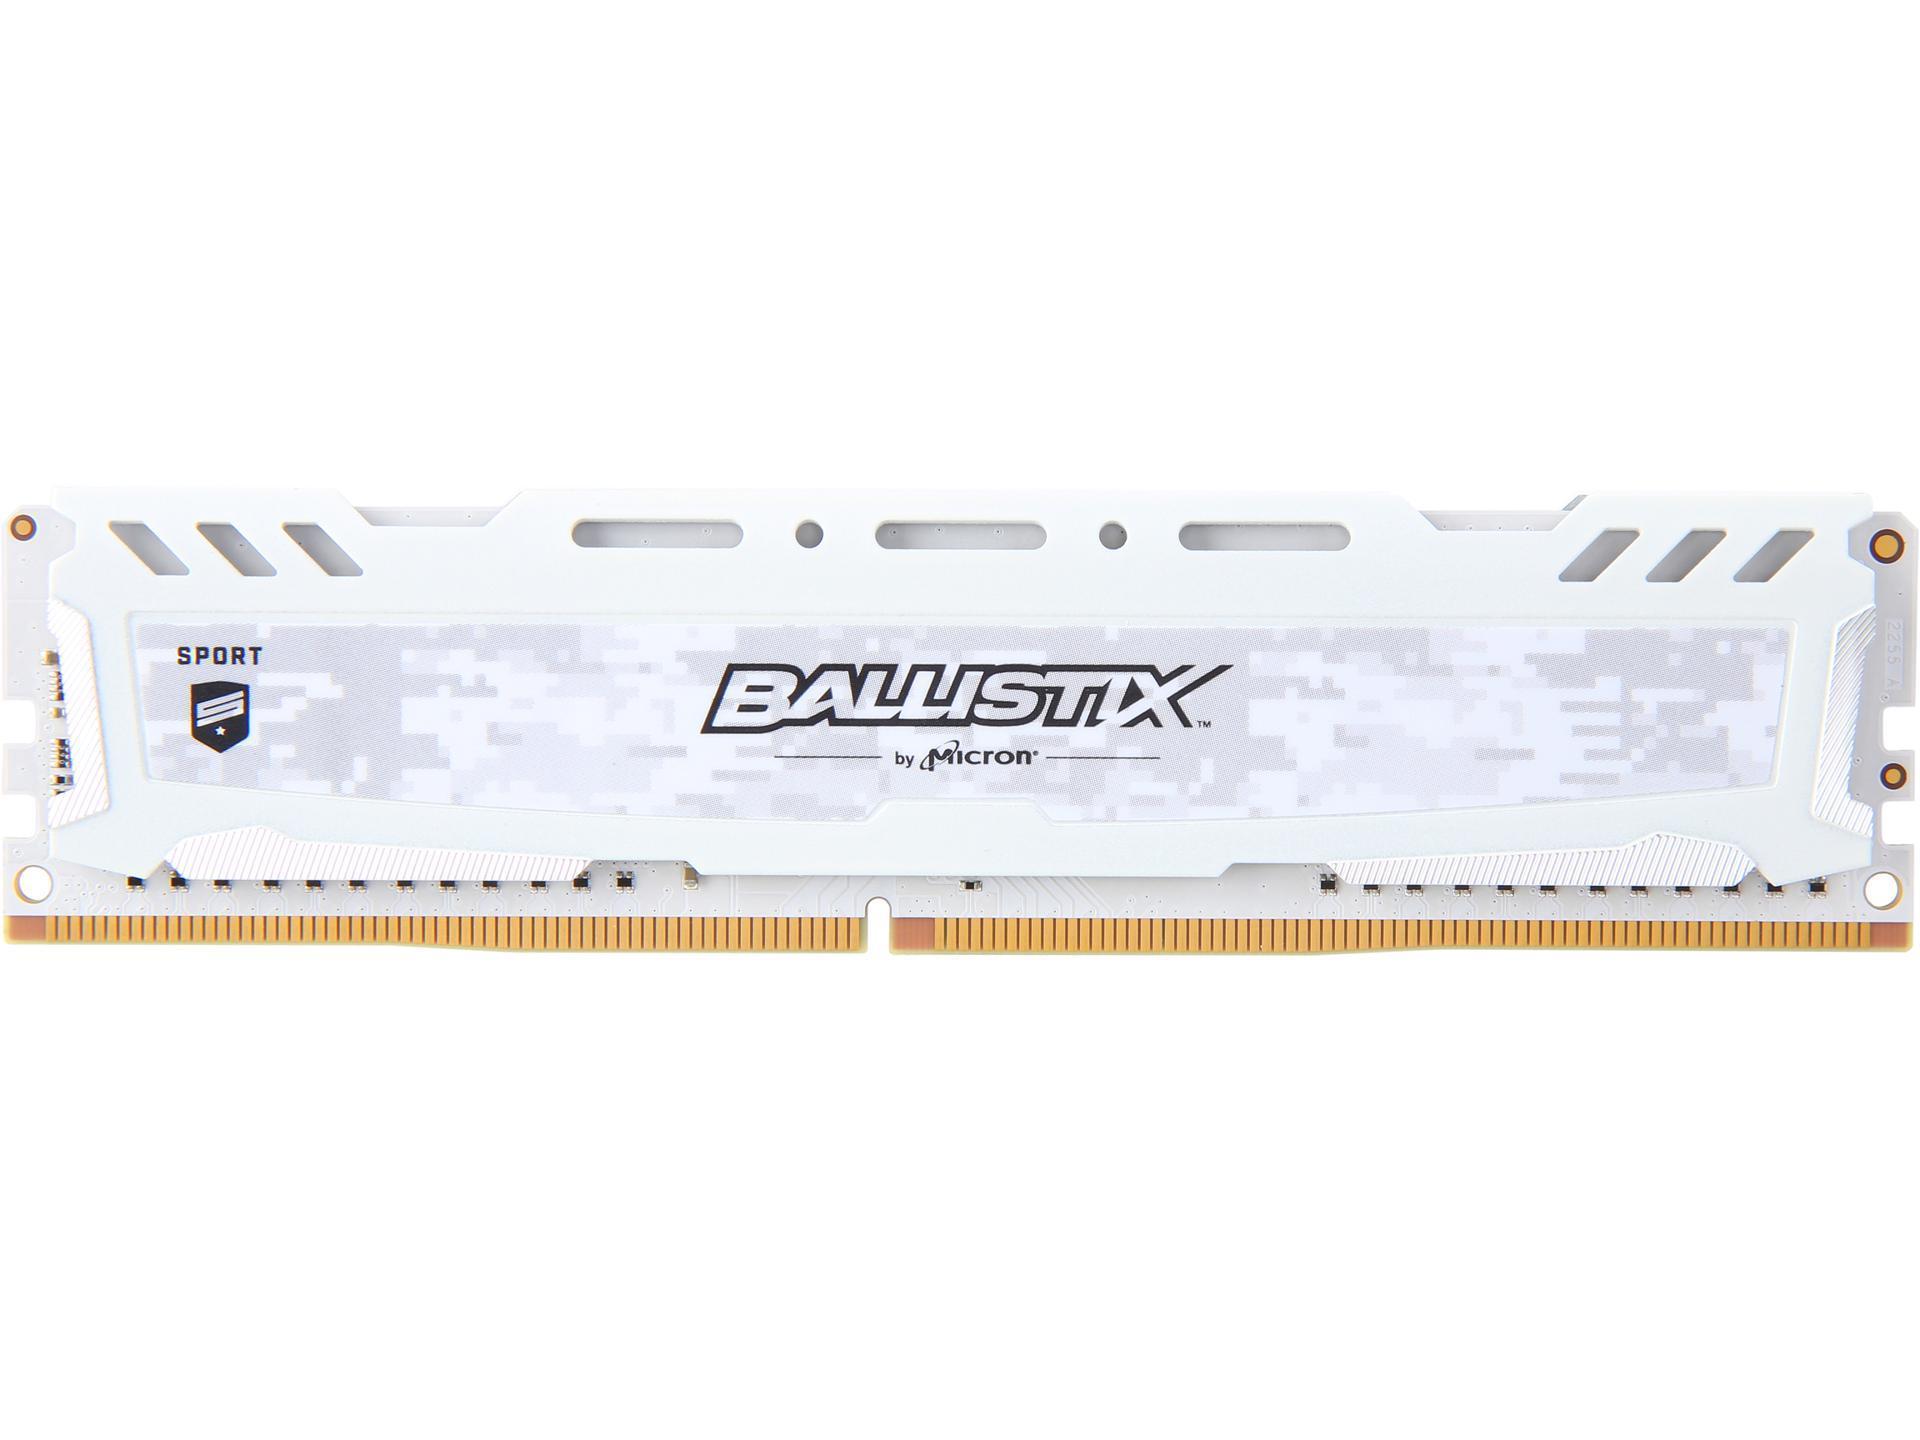 RAM Crucial Ballistix Sport LT 8GB (1x8) DDR4-3200 CL16 (BLS8G4D32AESCK) slide image 0